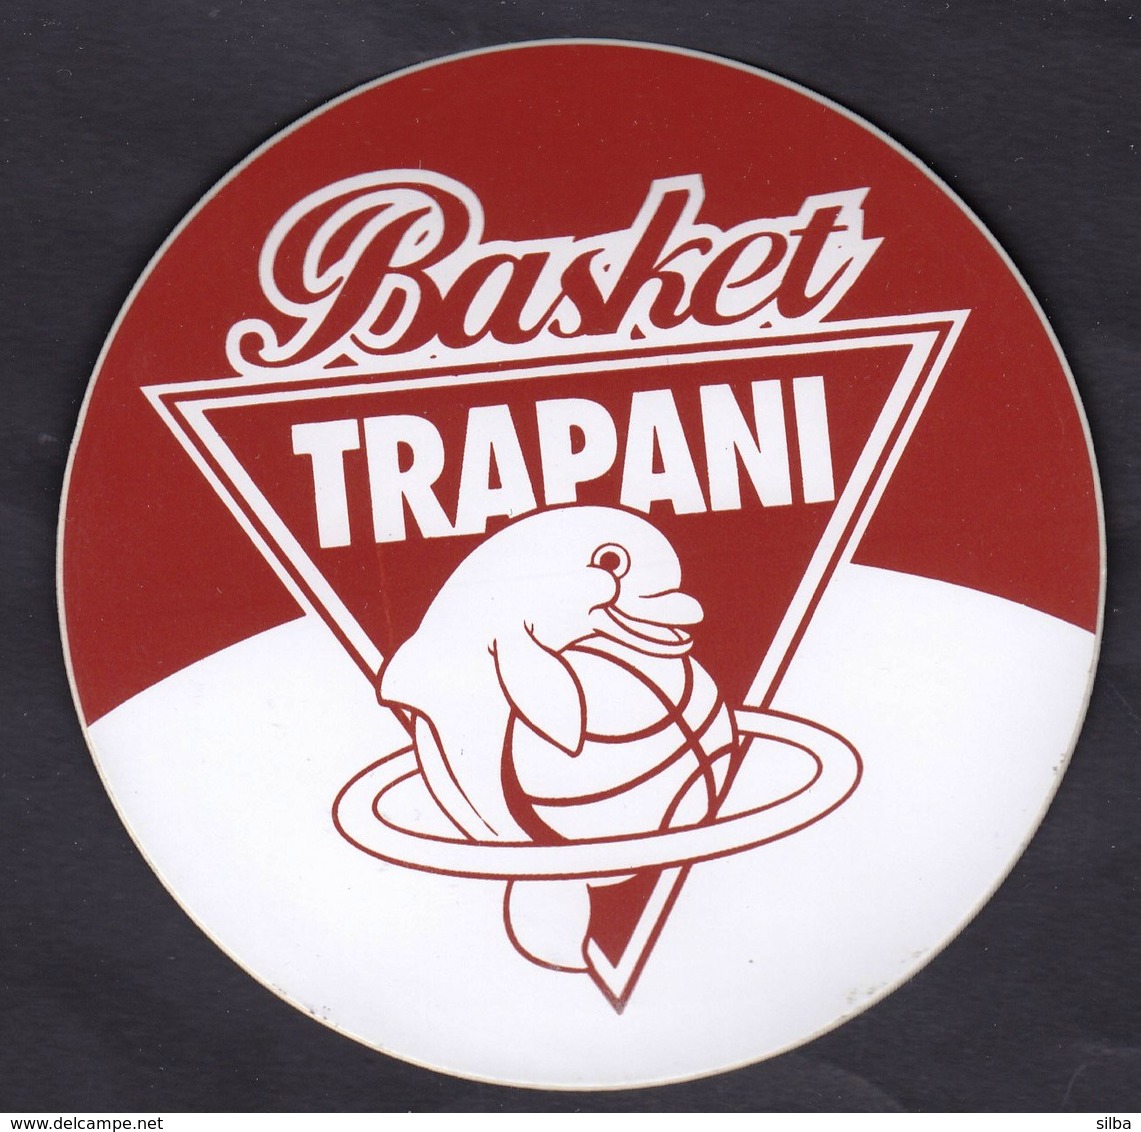 Basketball / Basket Trapani / Dolphin / Adesivo Sticker Label Autocollant / Pallacanestro - Apparel, Souvenirs & Other